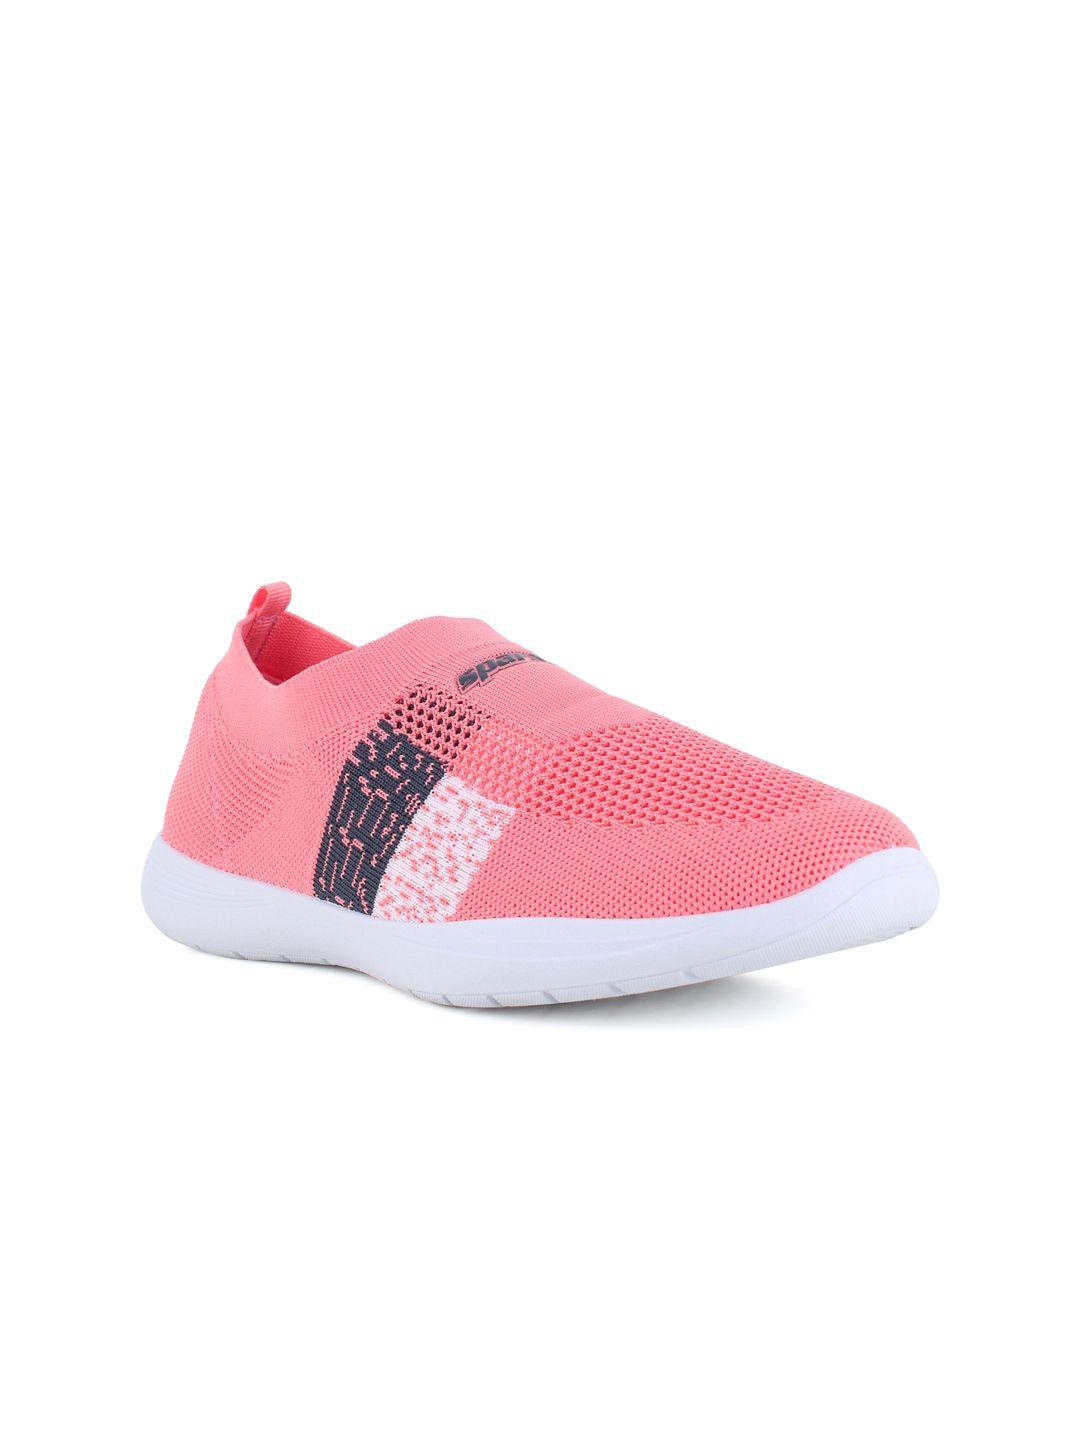 sparx women peach-coloured woven design slip-on sneakers